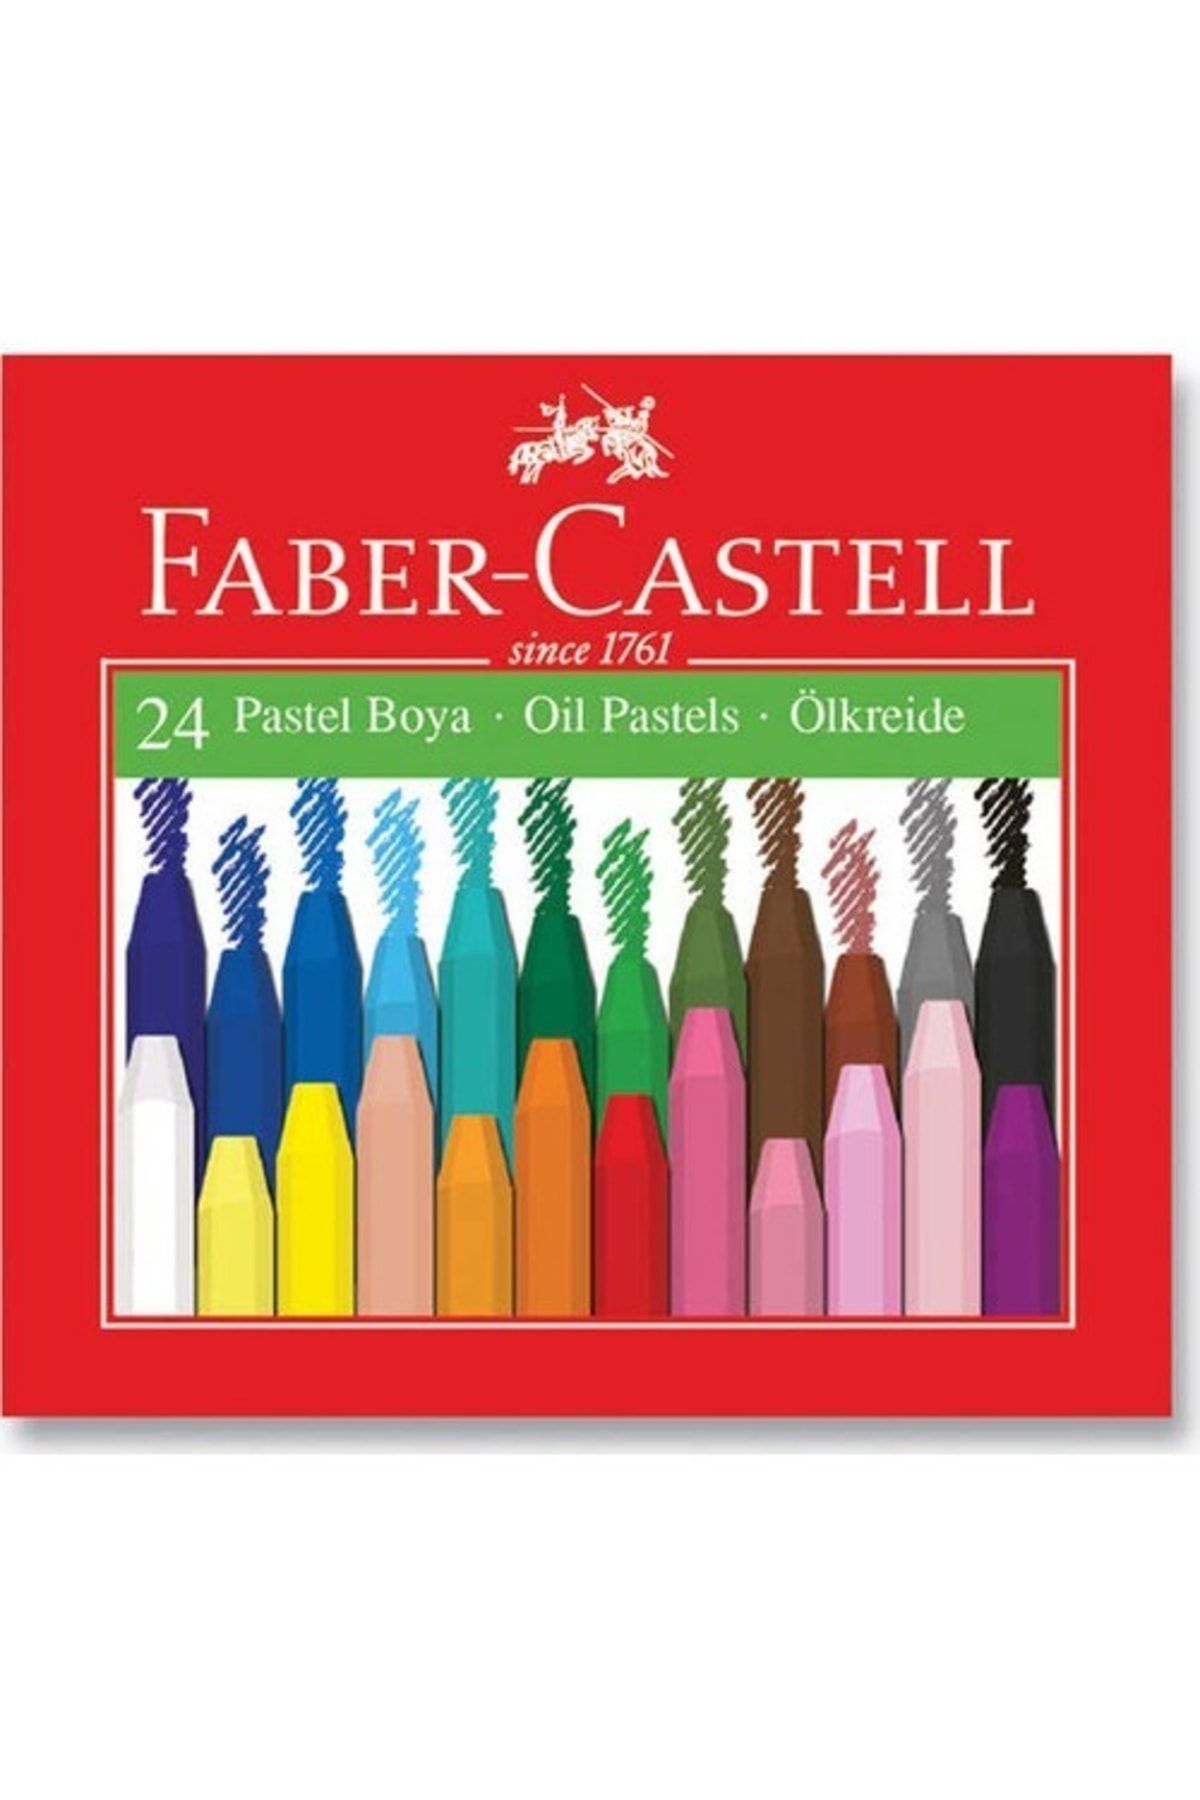 Faber Castell Faber-castell Pastel Boya 24'lü